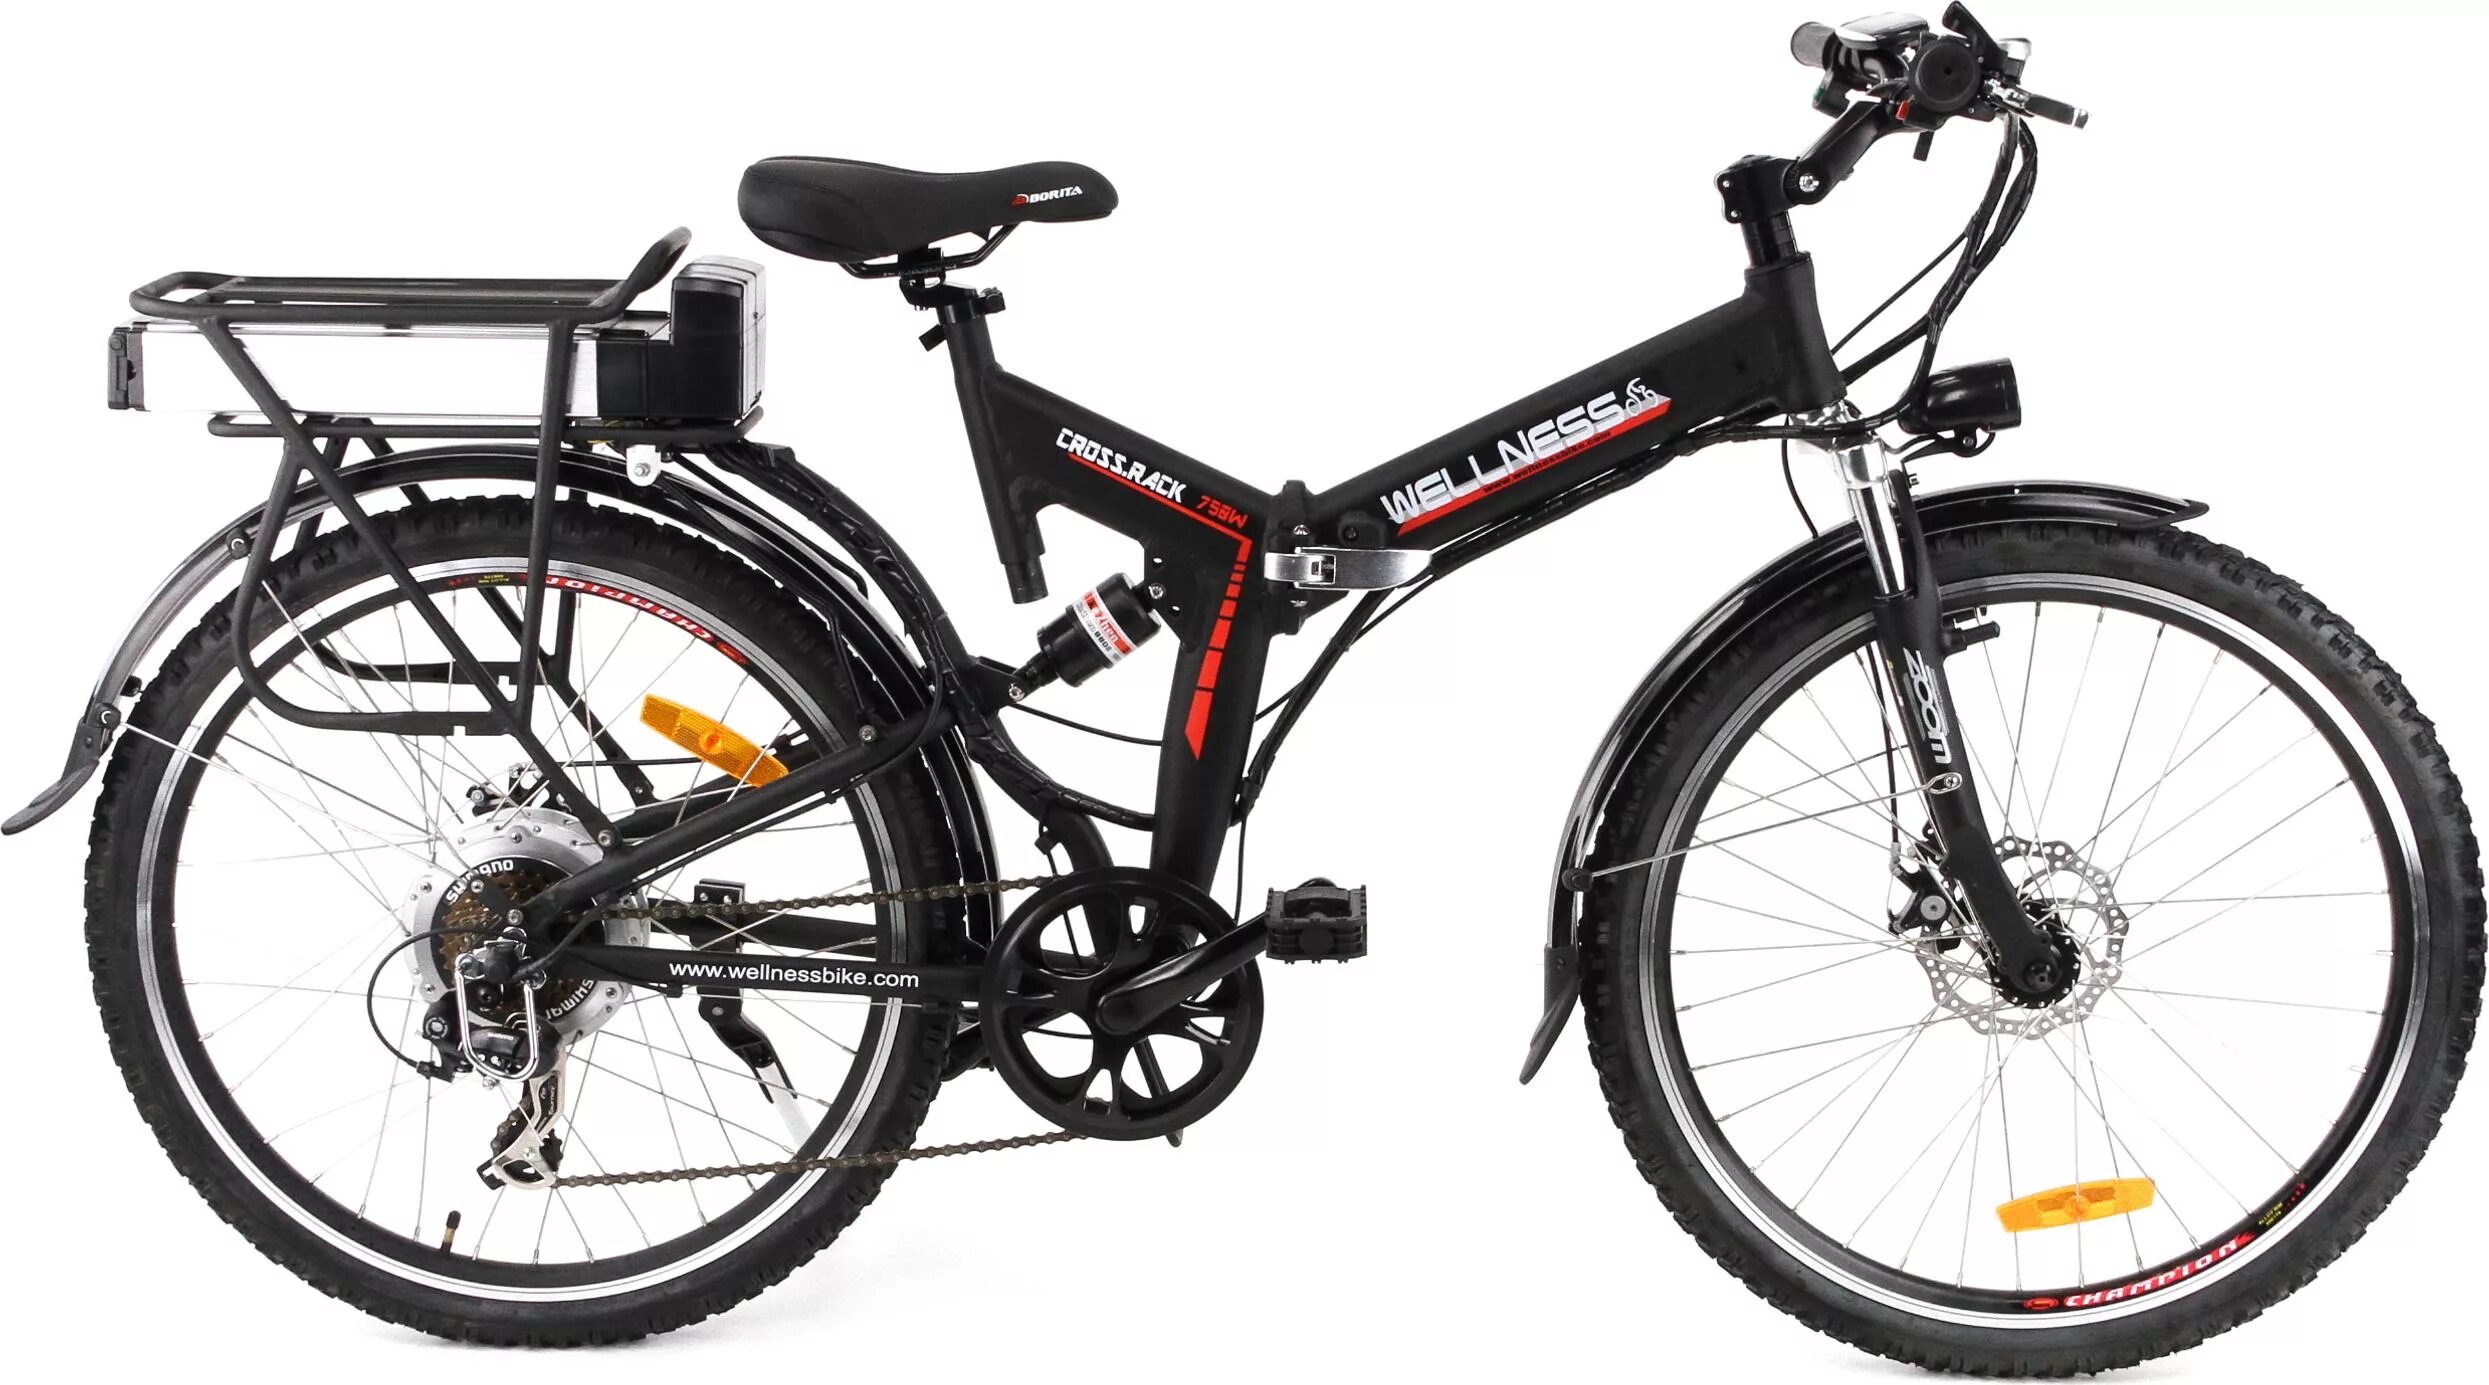 Электровелосипед купить в туле. Электровелосипед Wellness Cross Rack 750. Wels Saturn велосипед. Велнес велосипед. Амортизатор Wellness Cross. Pack 750w.